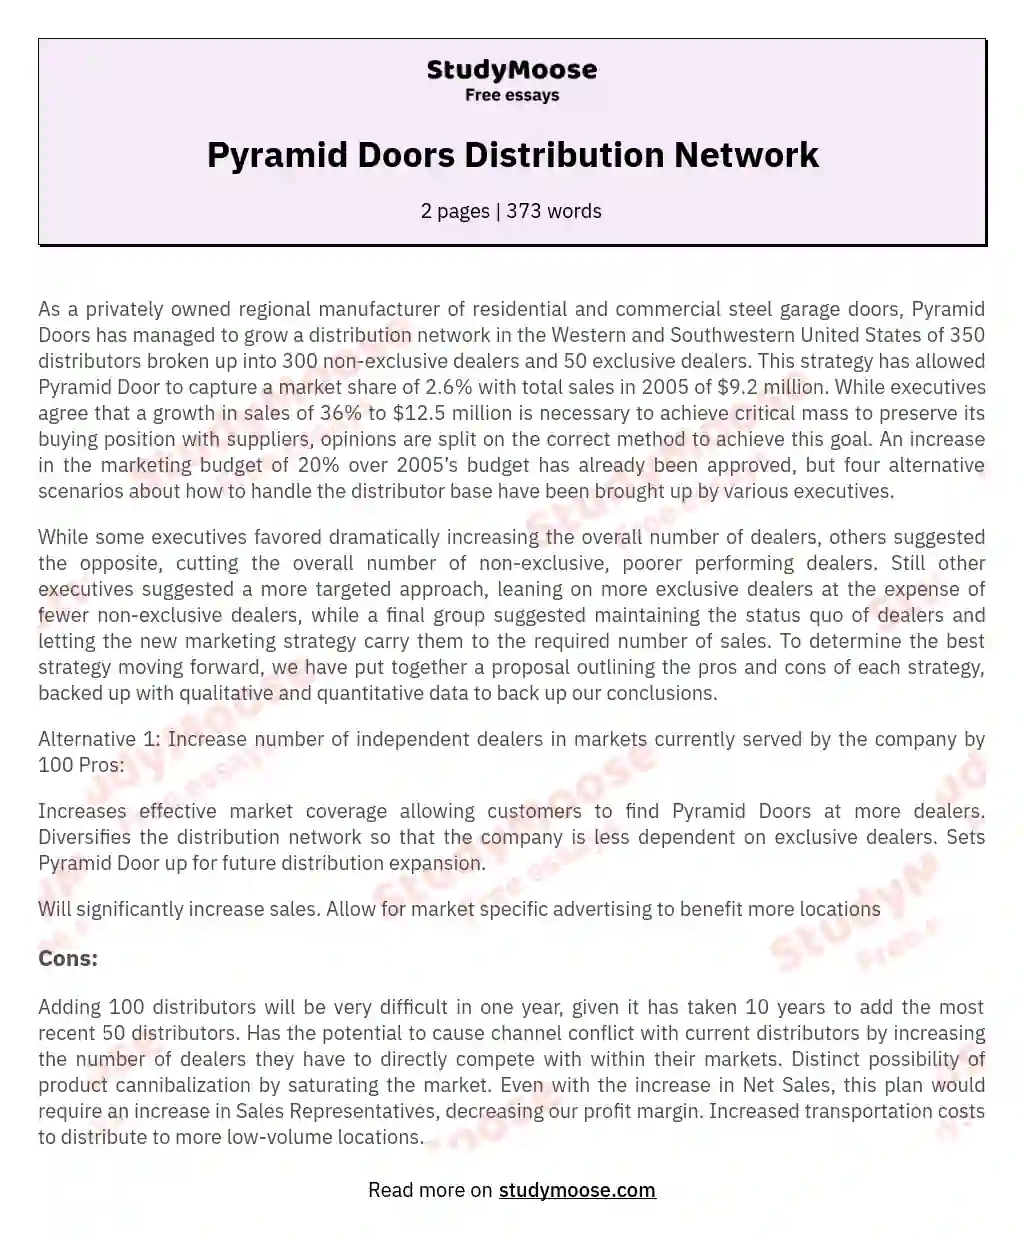 Pyramid Doors Distribution Network essay